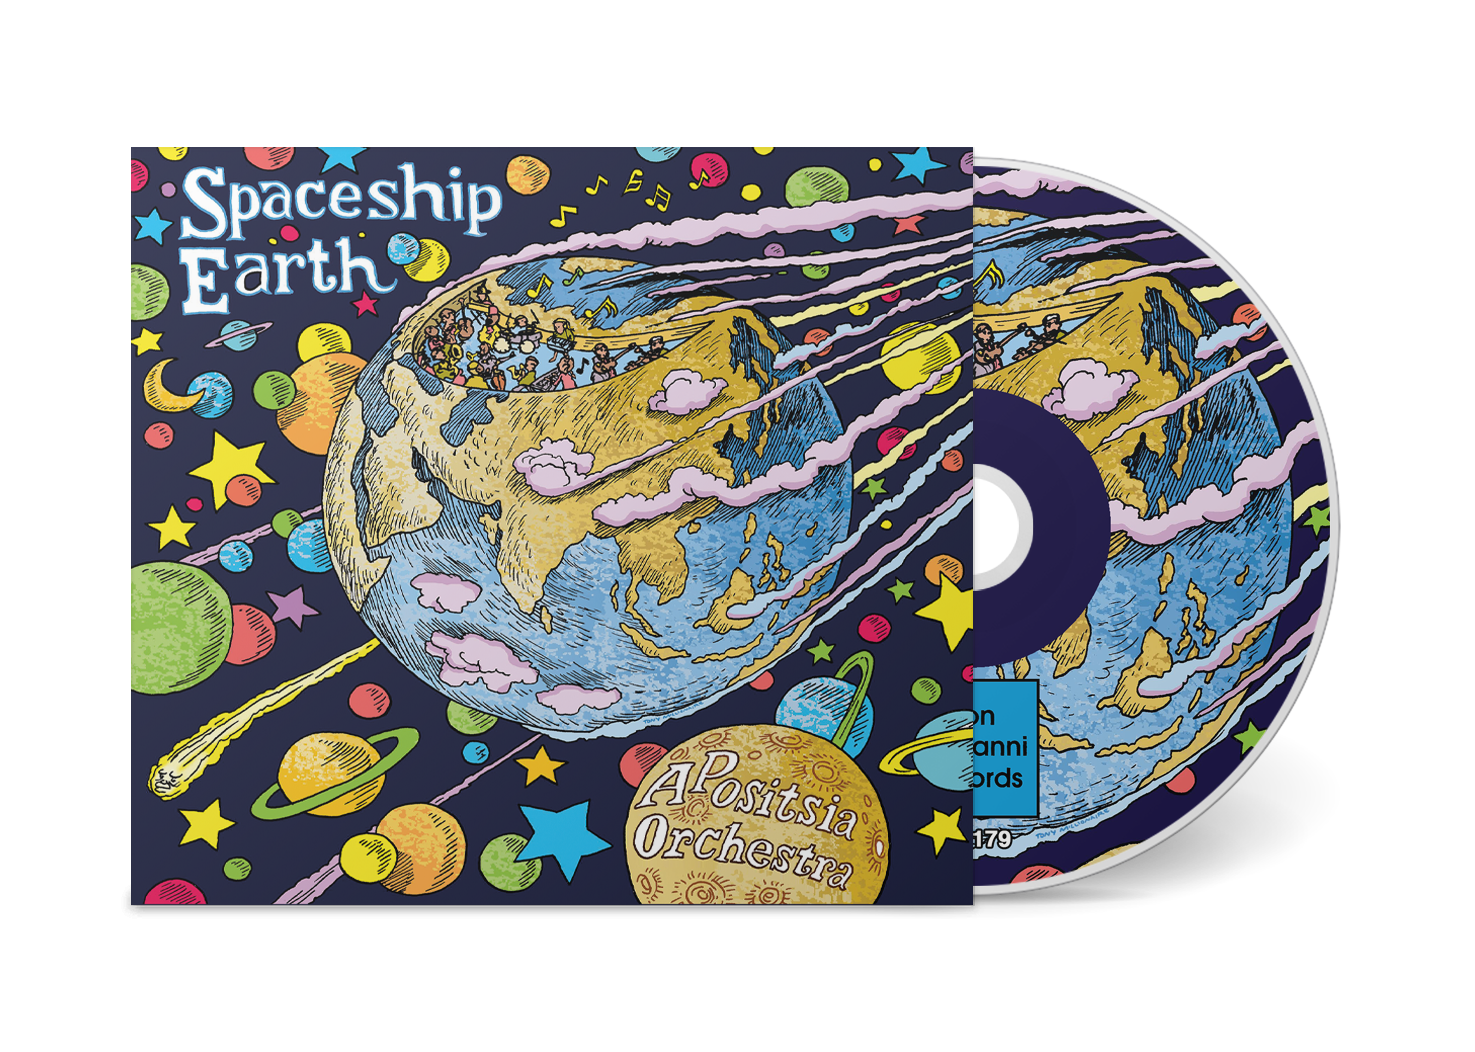 APositsia Orchestra "Spaceship Earth" CD